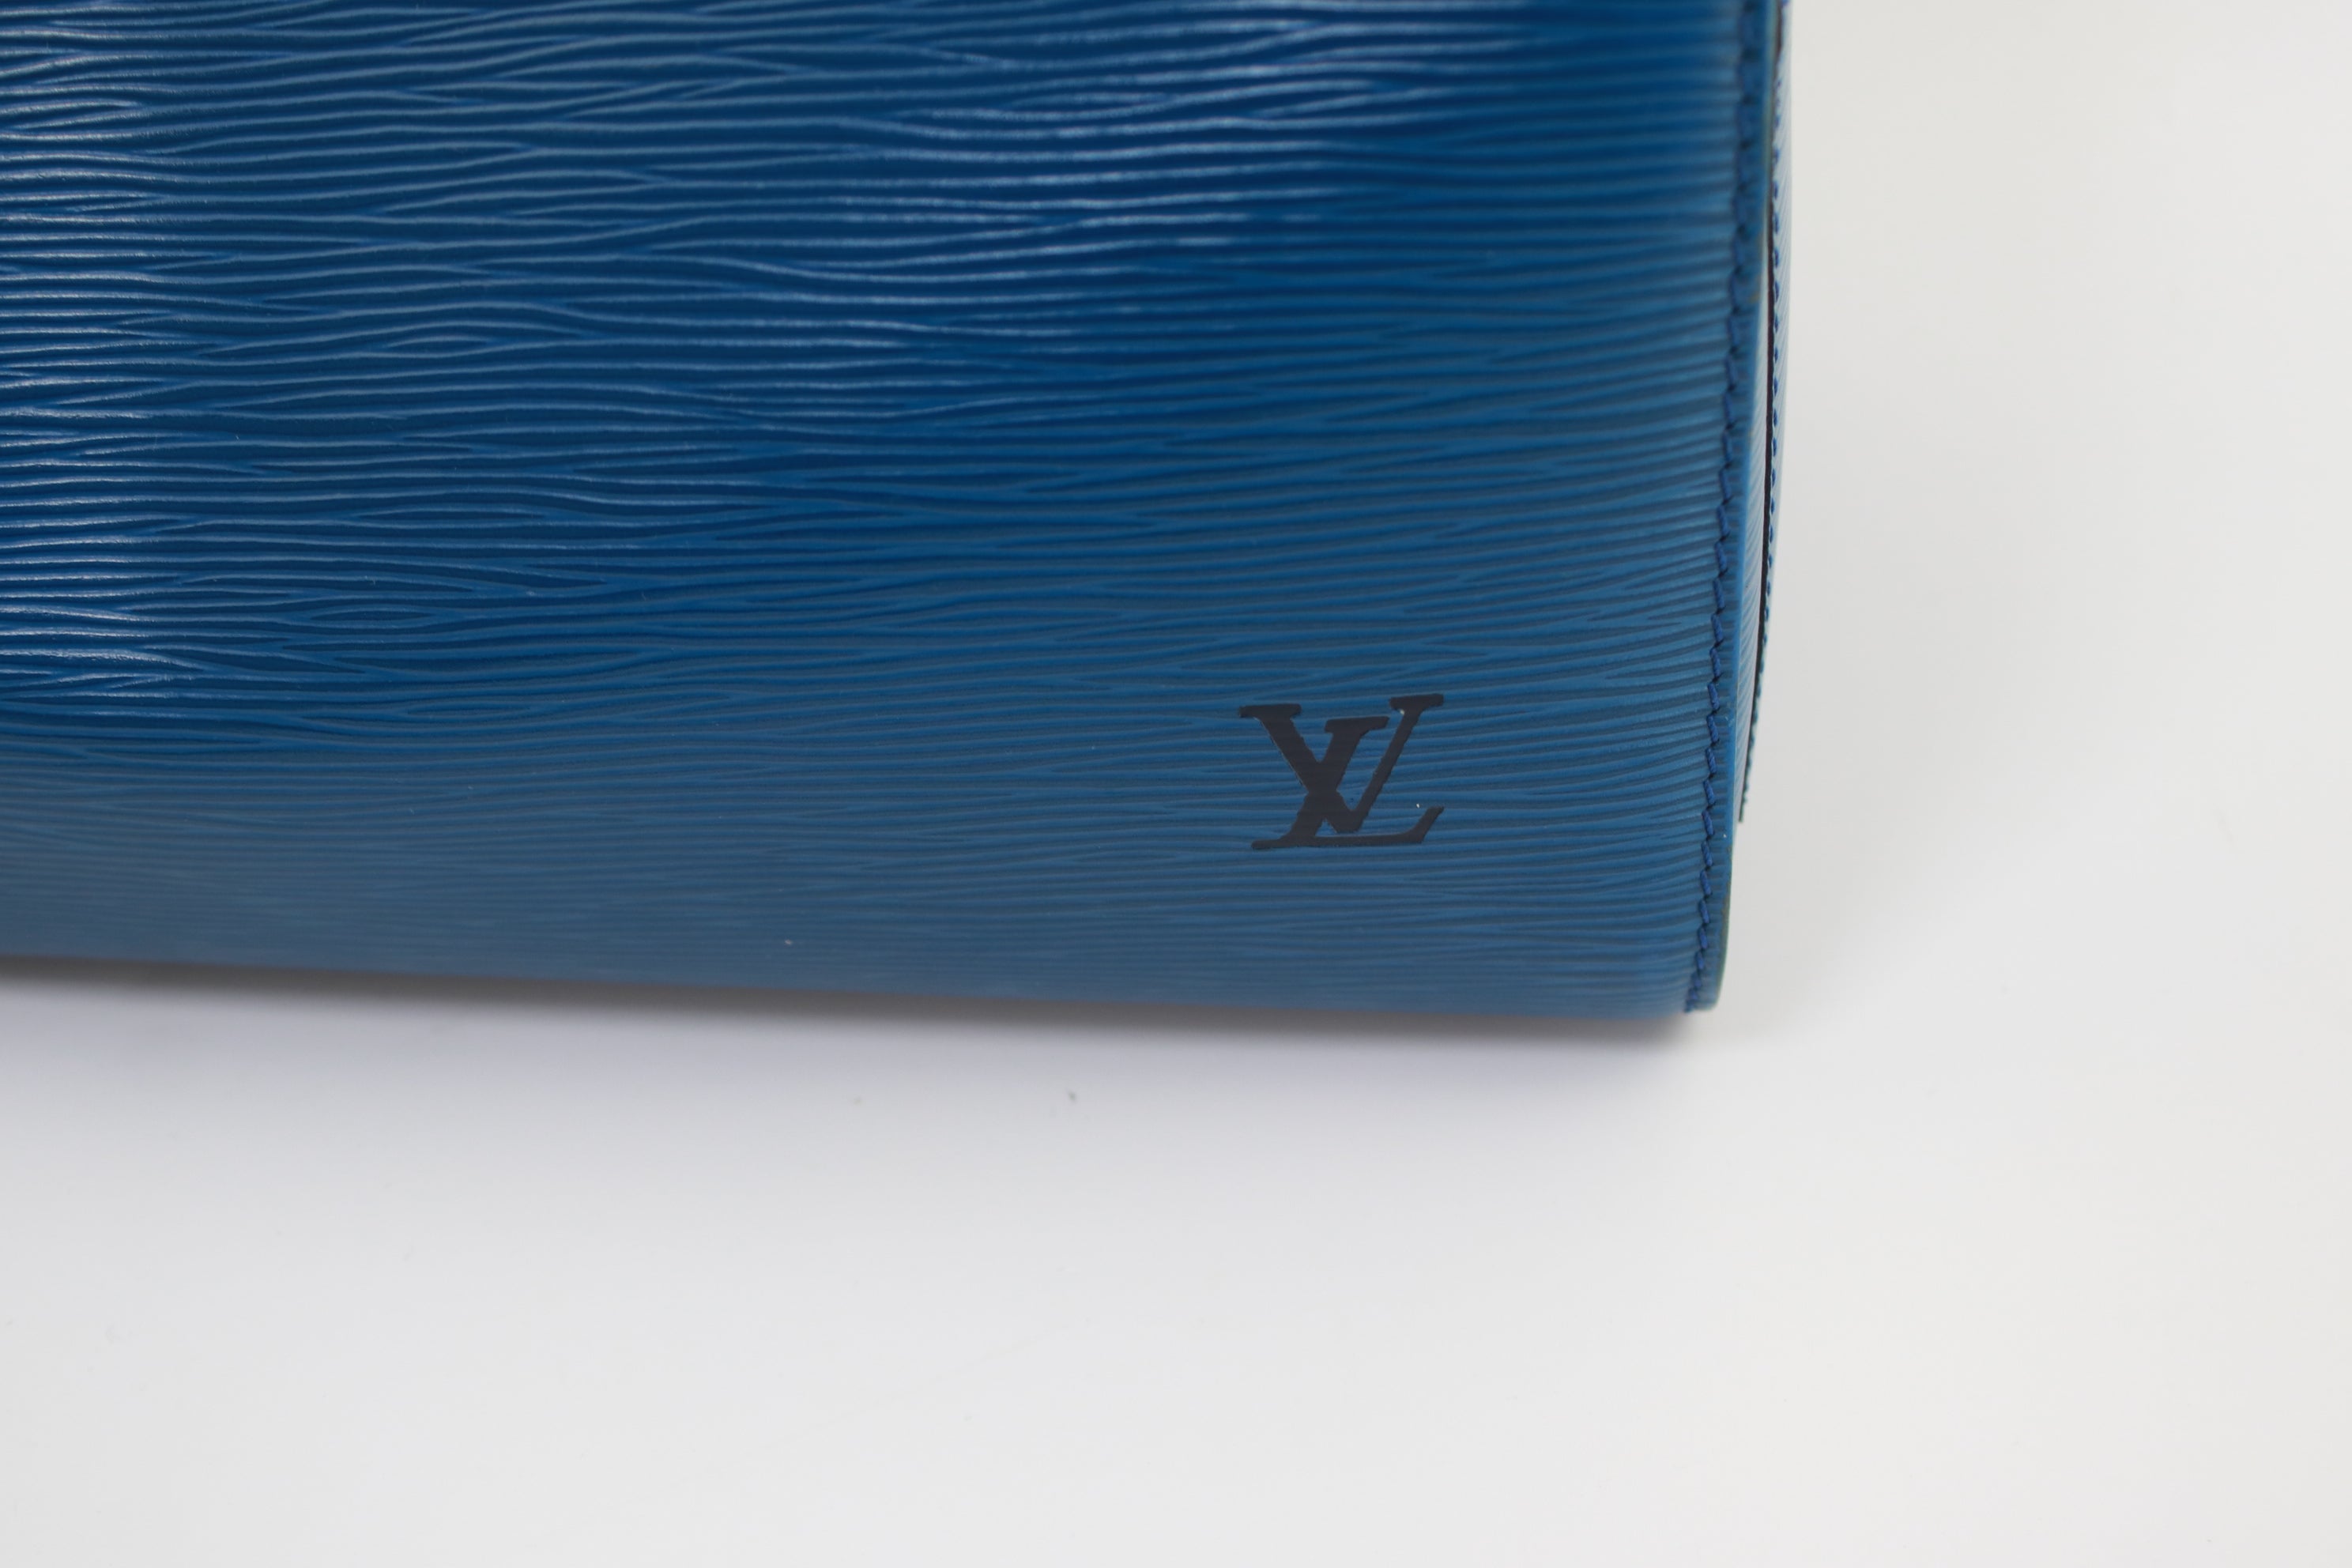 Louis Vuitton Speedy 30 Epi Blue Handbag Used (6766)